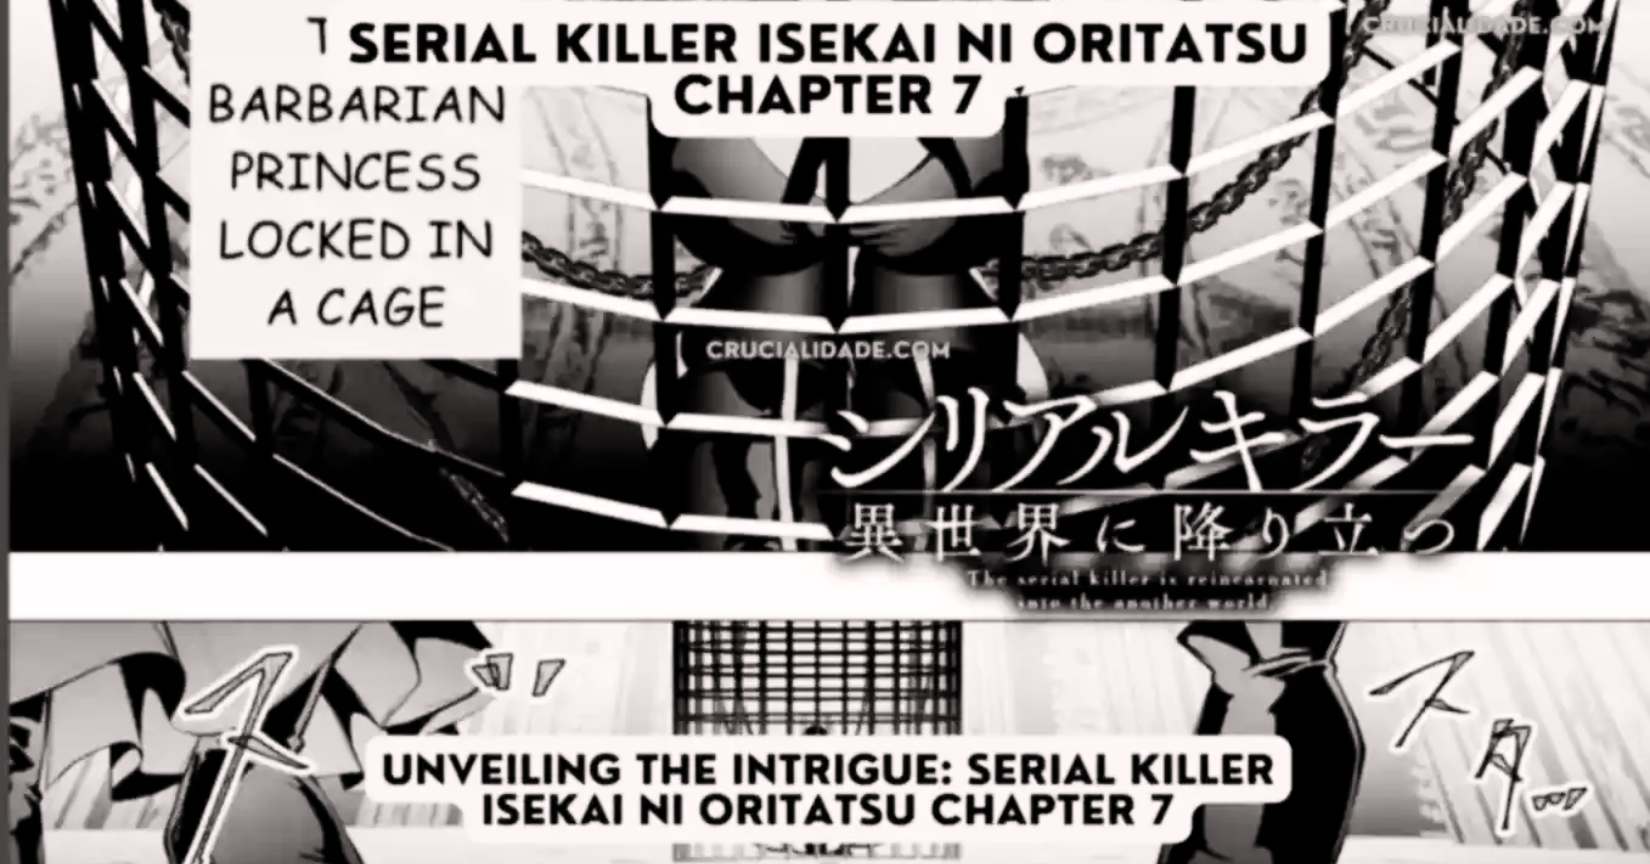 Serial Killer Isekai Ni Oritatsu Chapter 7 A Synopsis